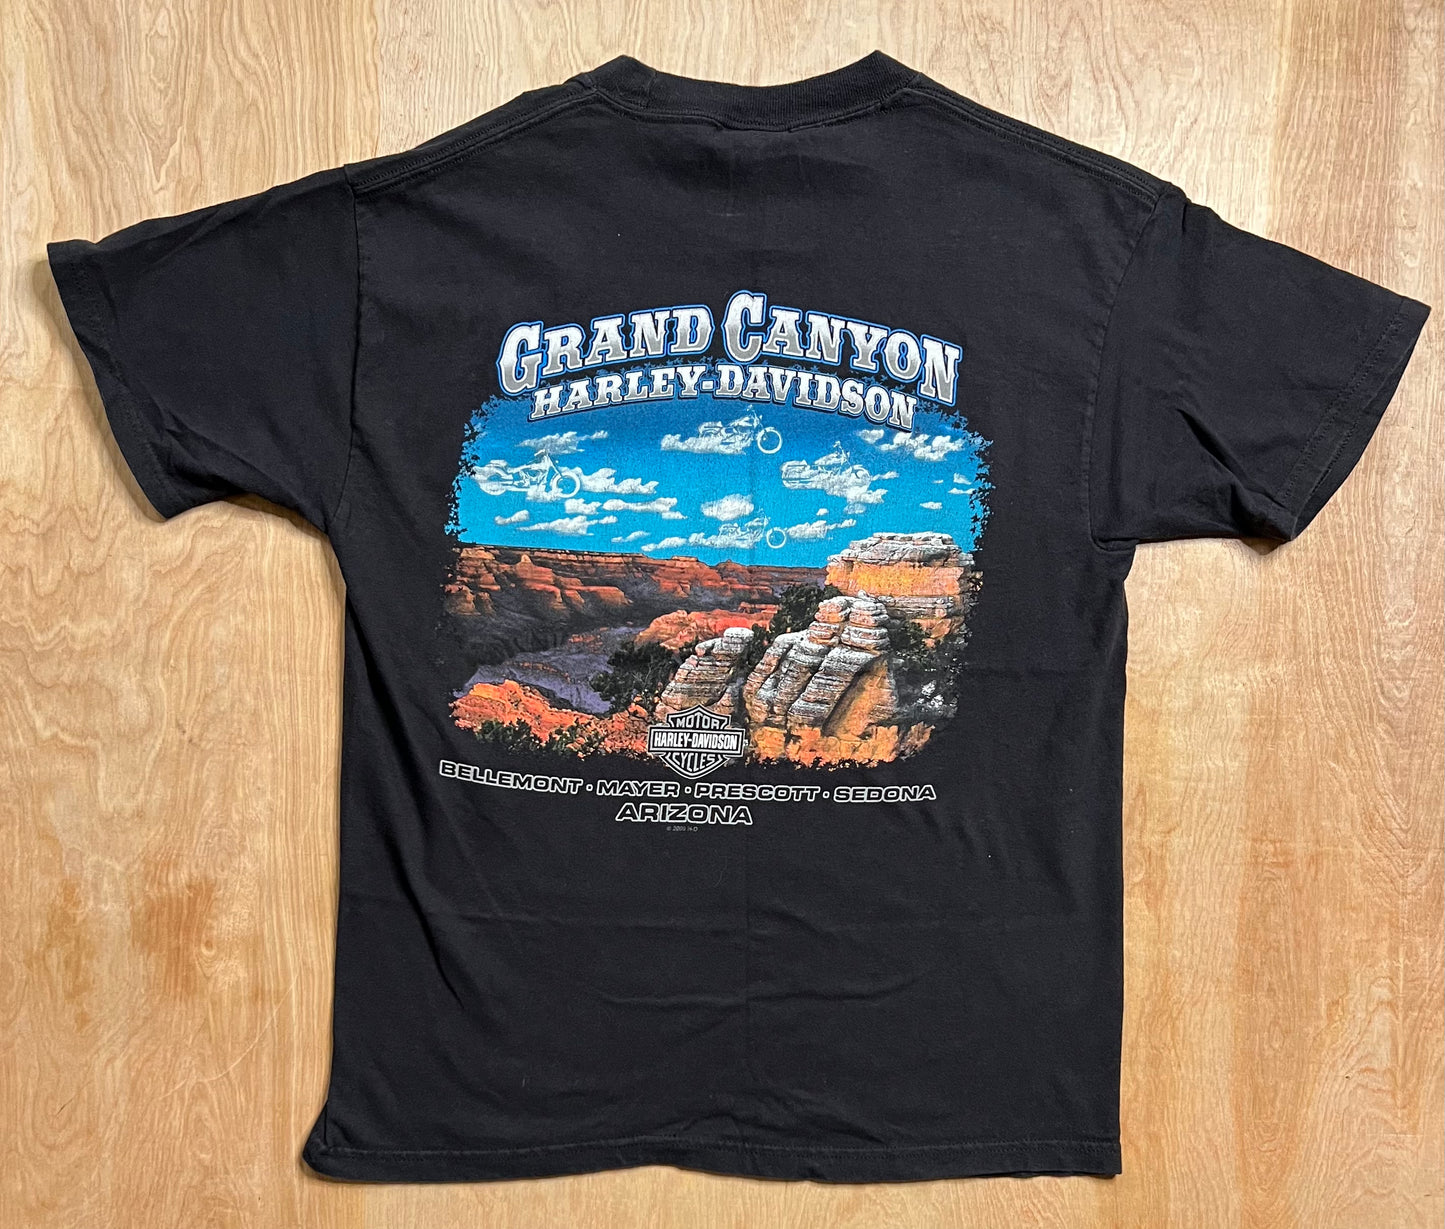 2009 Harley Davidson "Proven Performance" Grand Canyon T-Shirt